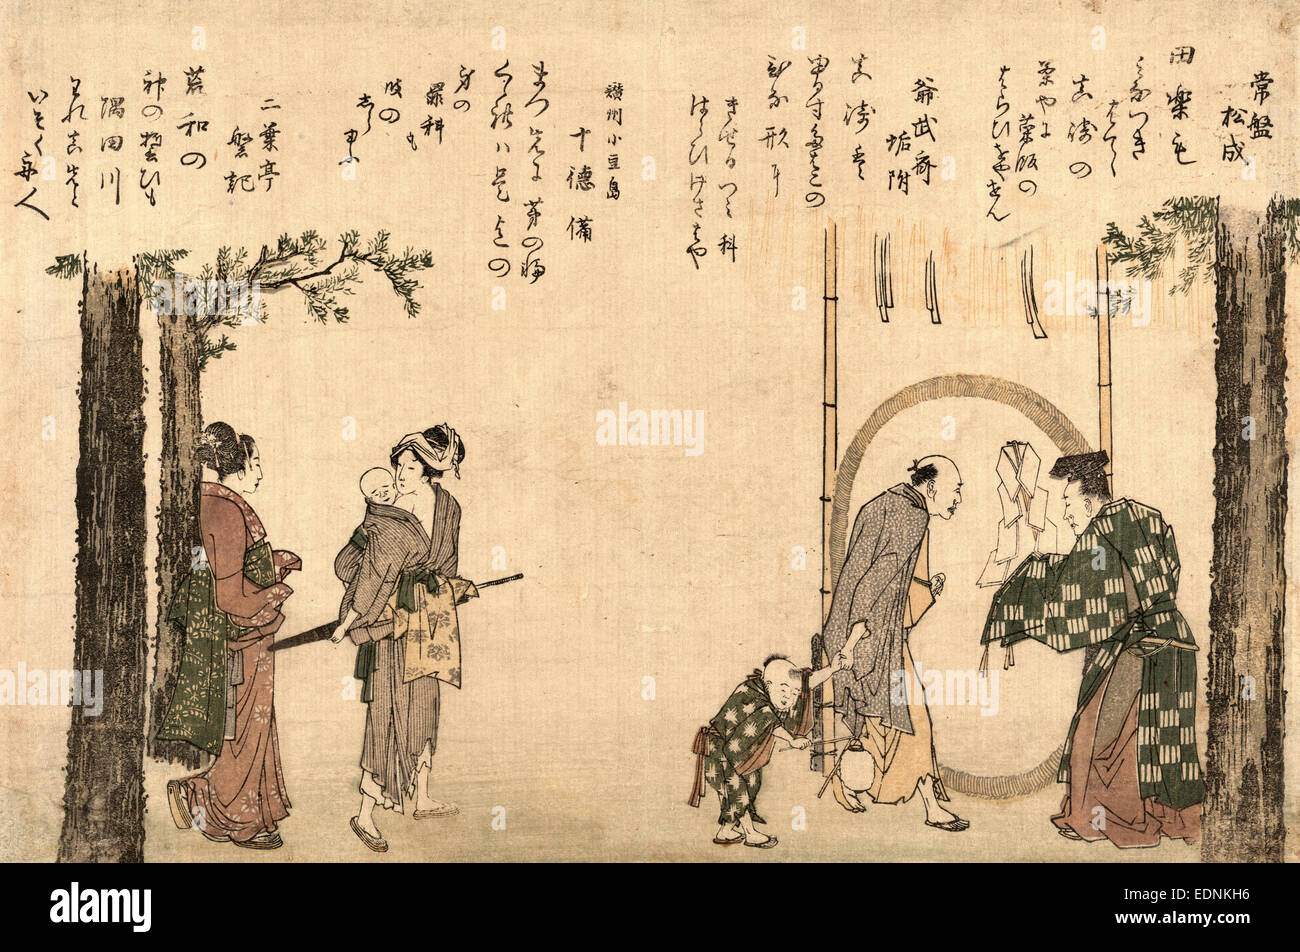 Miyakodori (masski inari), Ehon Miyakodori: Masaki., Katsushika, Hokusai, 1760-1849, artist, 1802., 1 print : woodcut, color ; 22.1 x 33 cm., Print shows a family arriving at a temple or shrine. Stock Photo